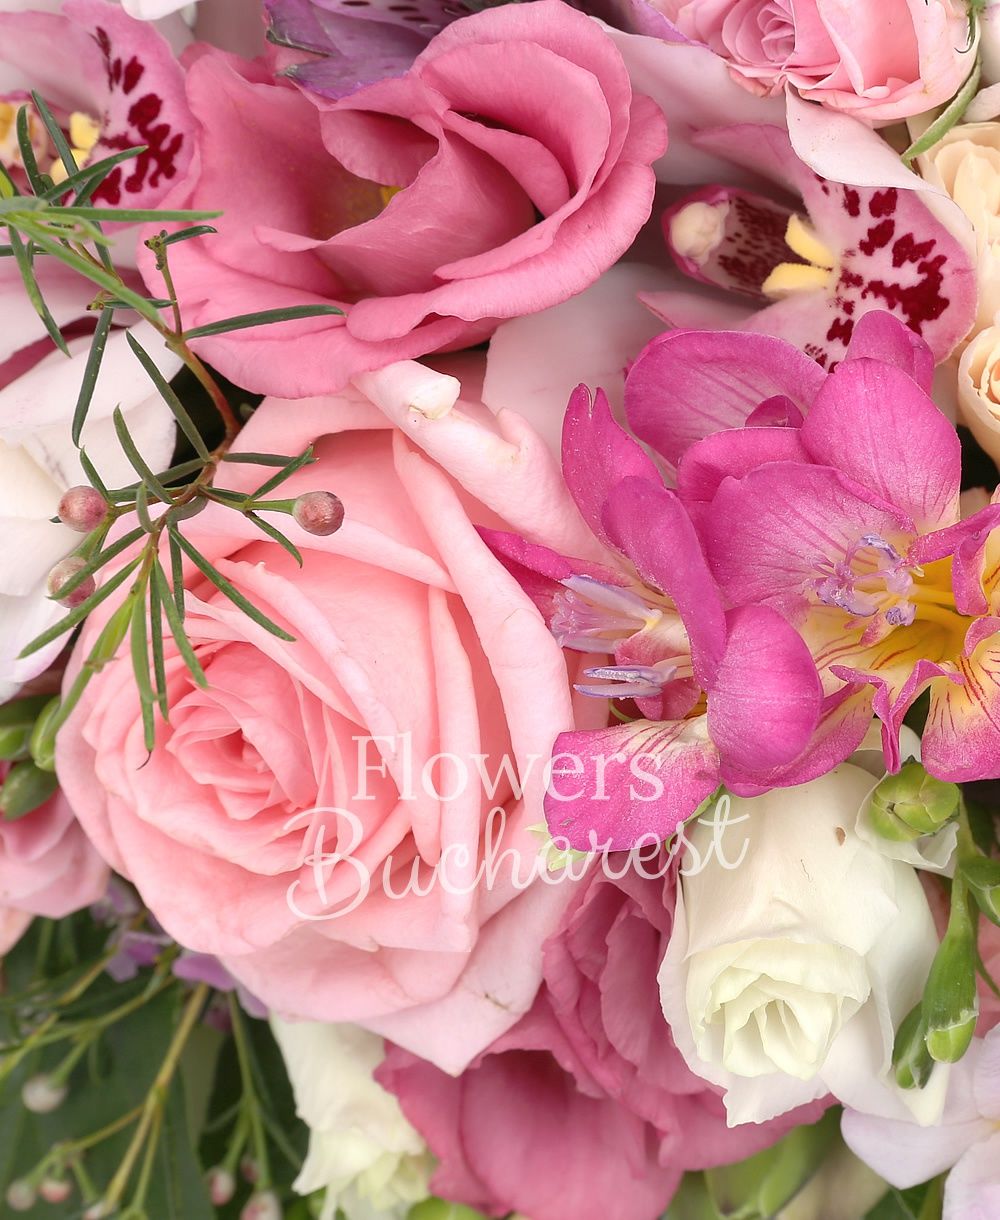 3 pink roses, 3 pink miniroses, 3 cream carnations, 5 cyclam freesias, 2 mauve alstroemeria, white cymbidium, 2 pink lisianthus, pink waxflower, greenery